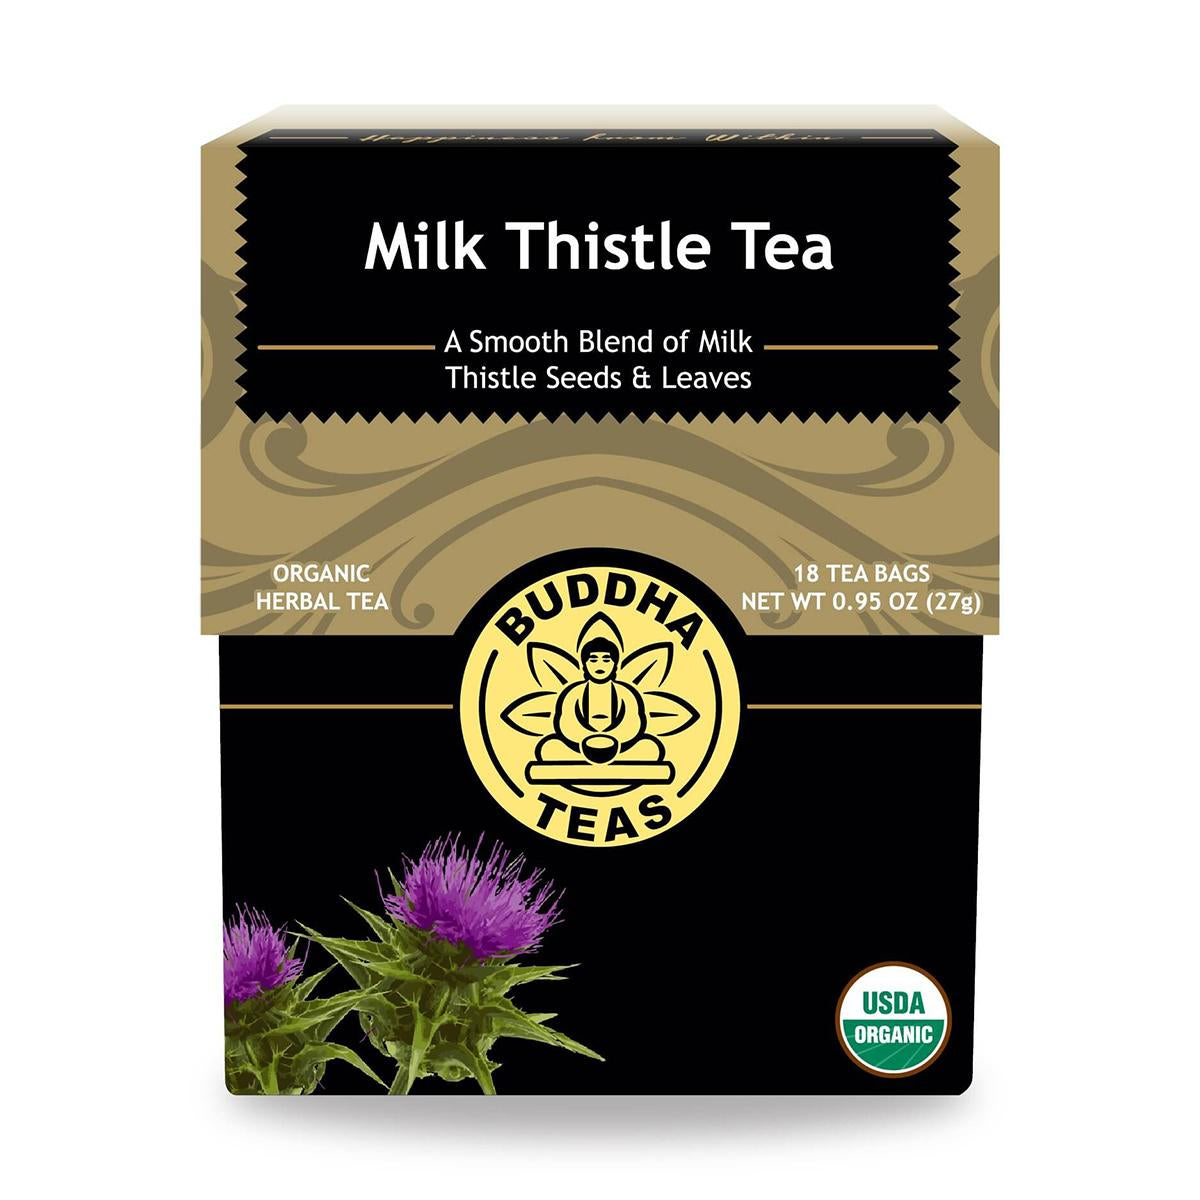 Primary image of Organic Milk Thistle Tea